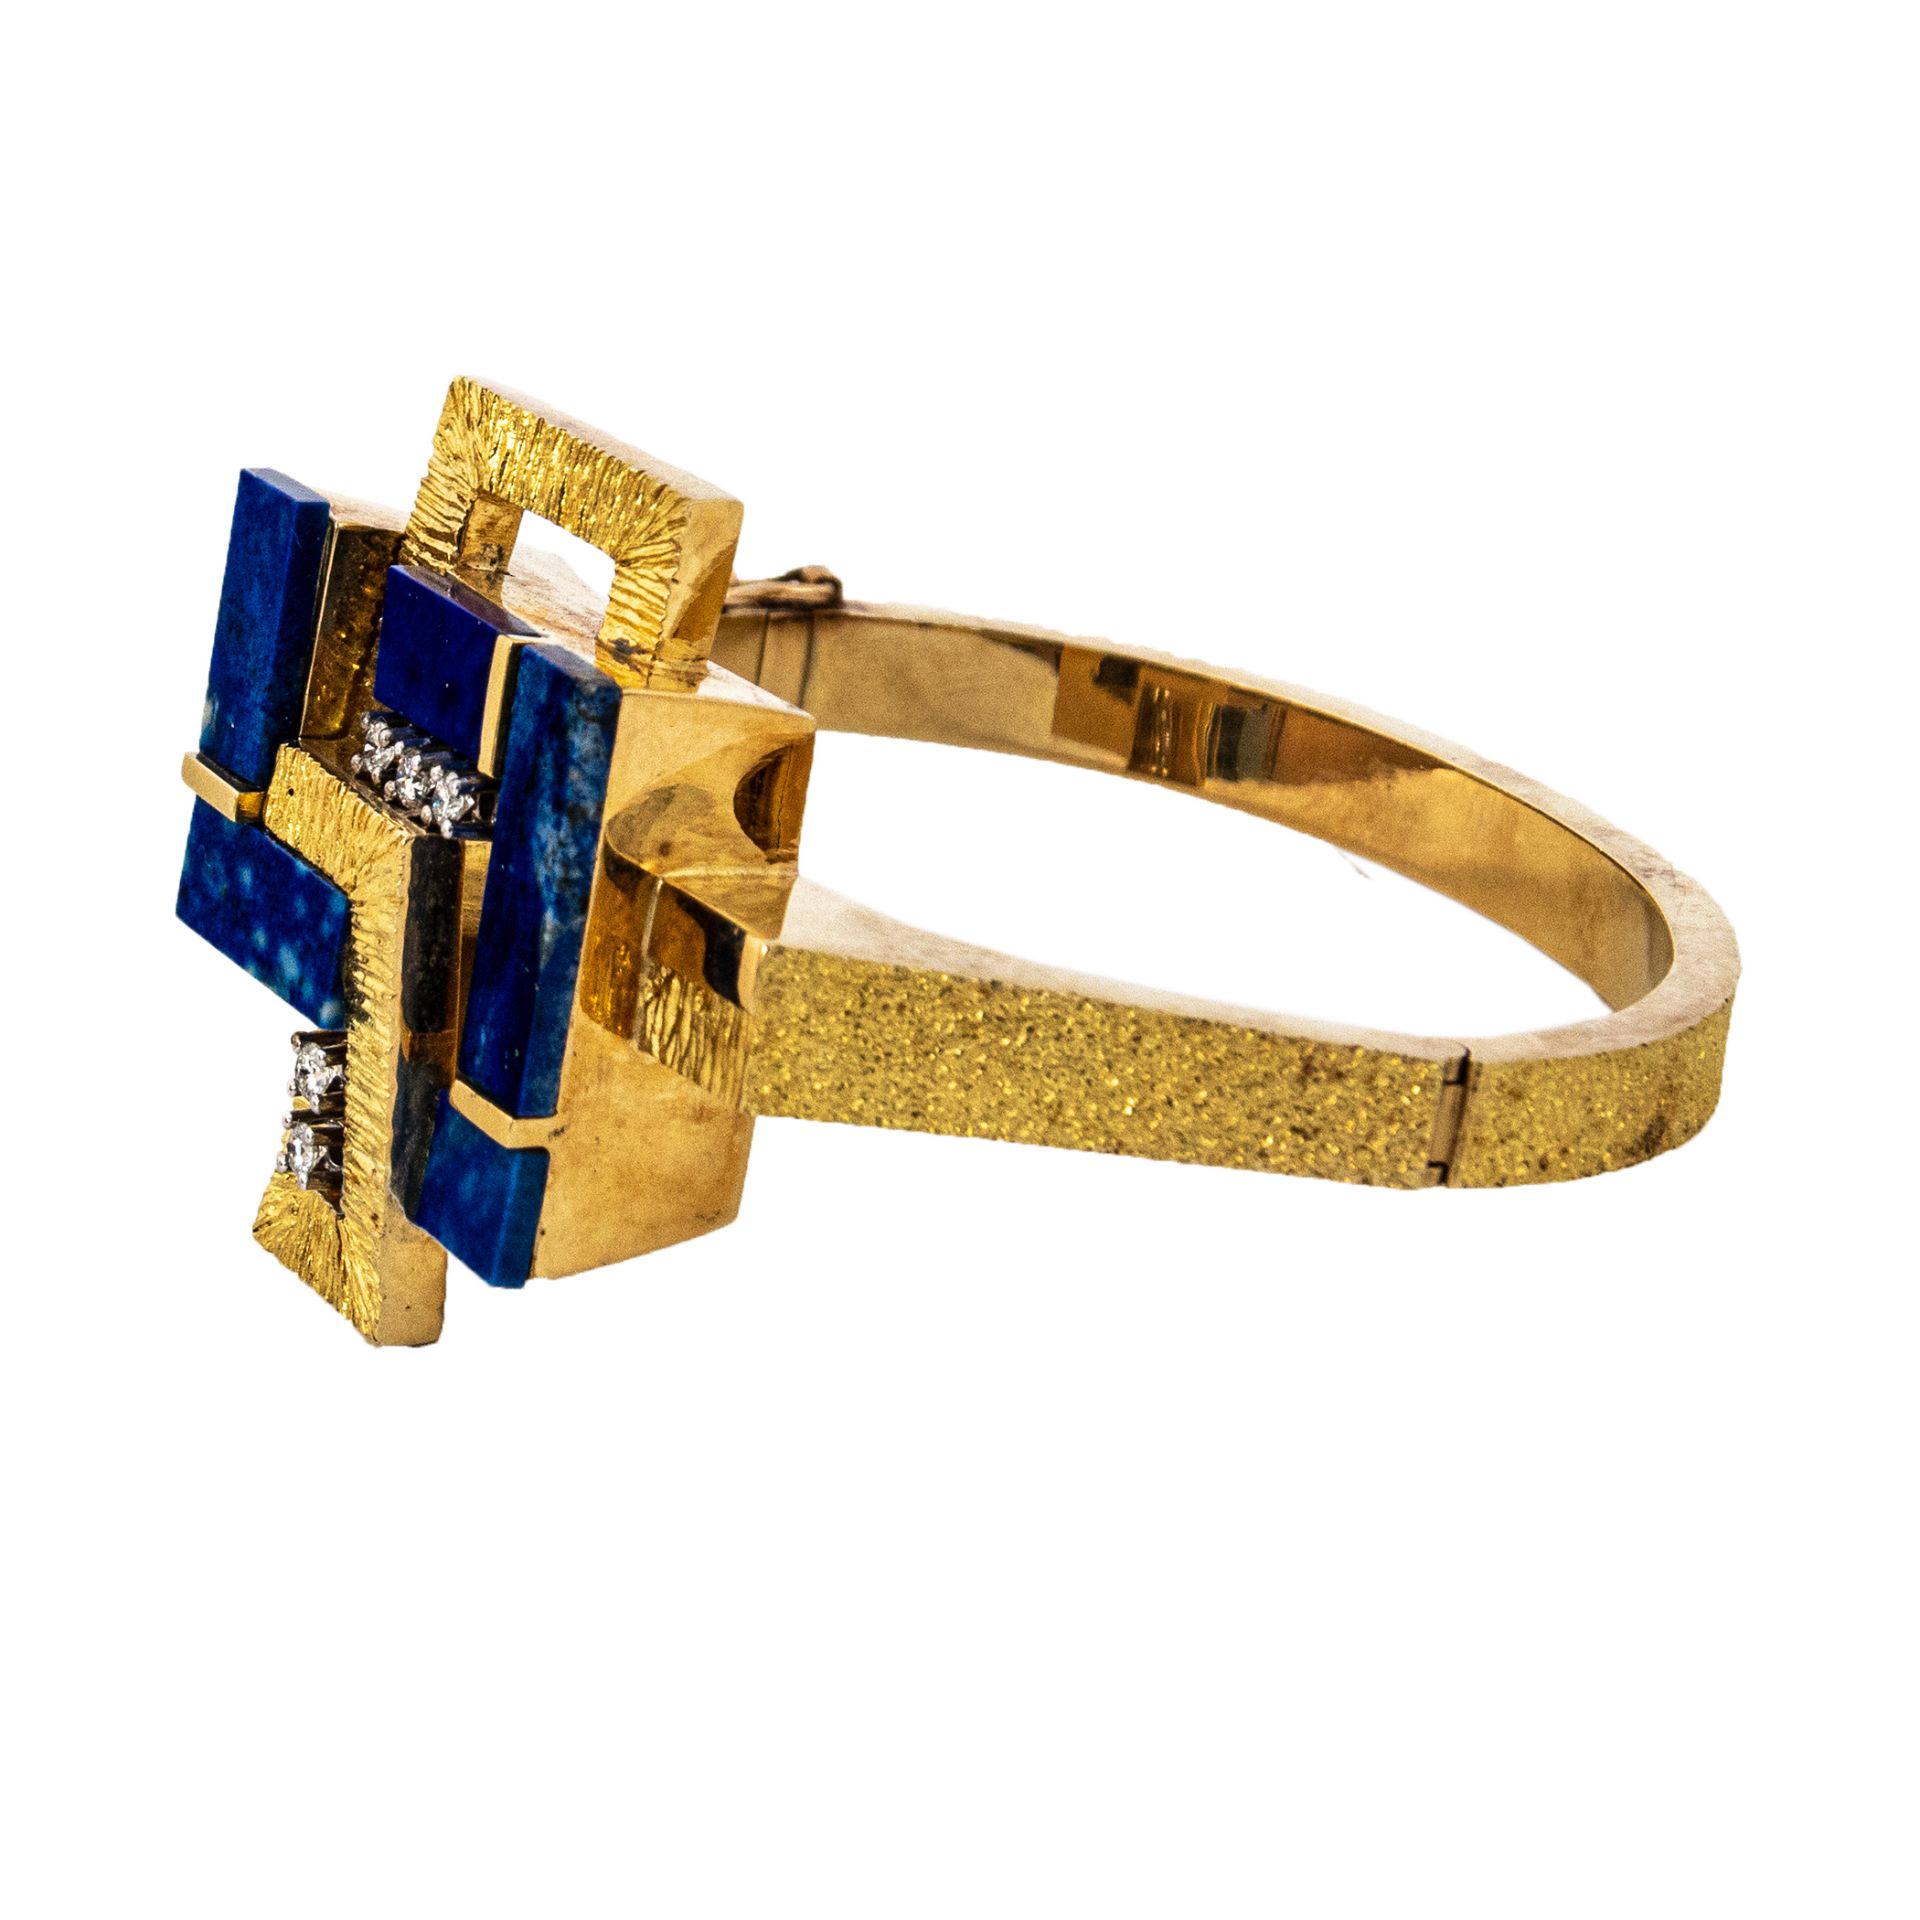 Gold, lapis lazuli and diamonds bracelet. - Image 2 of 2